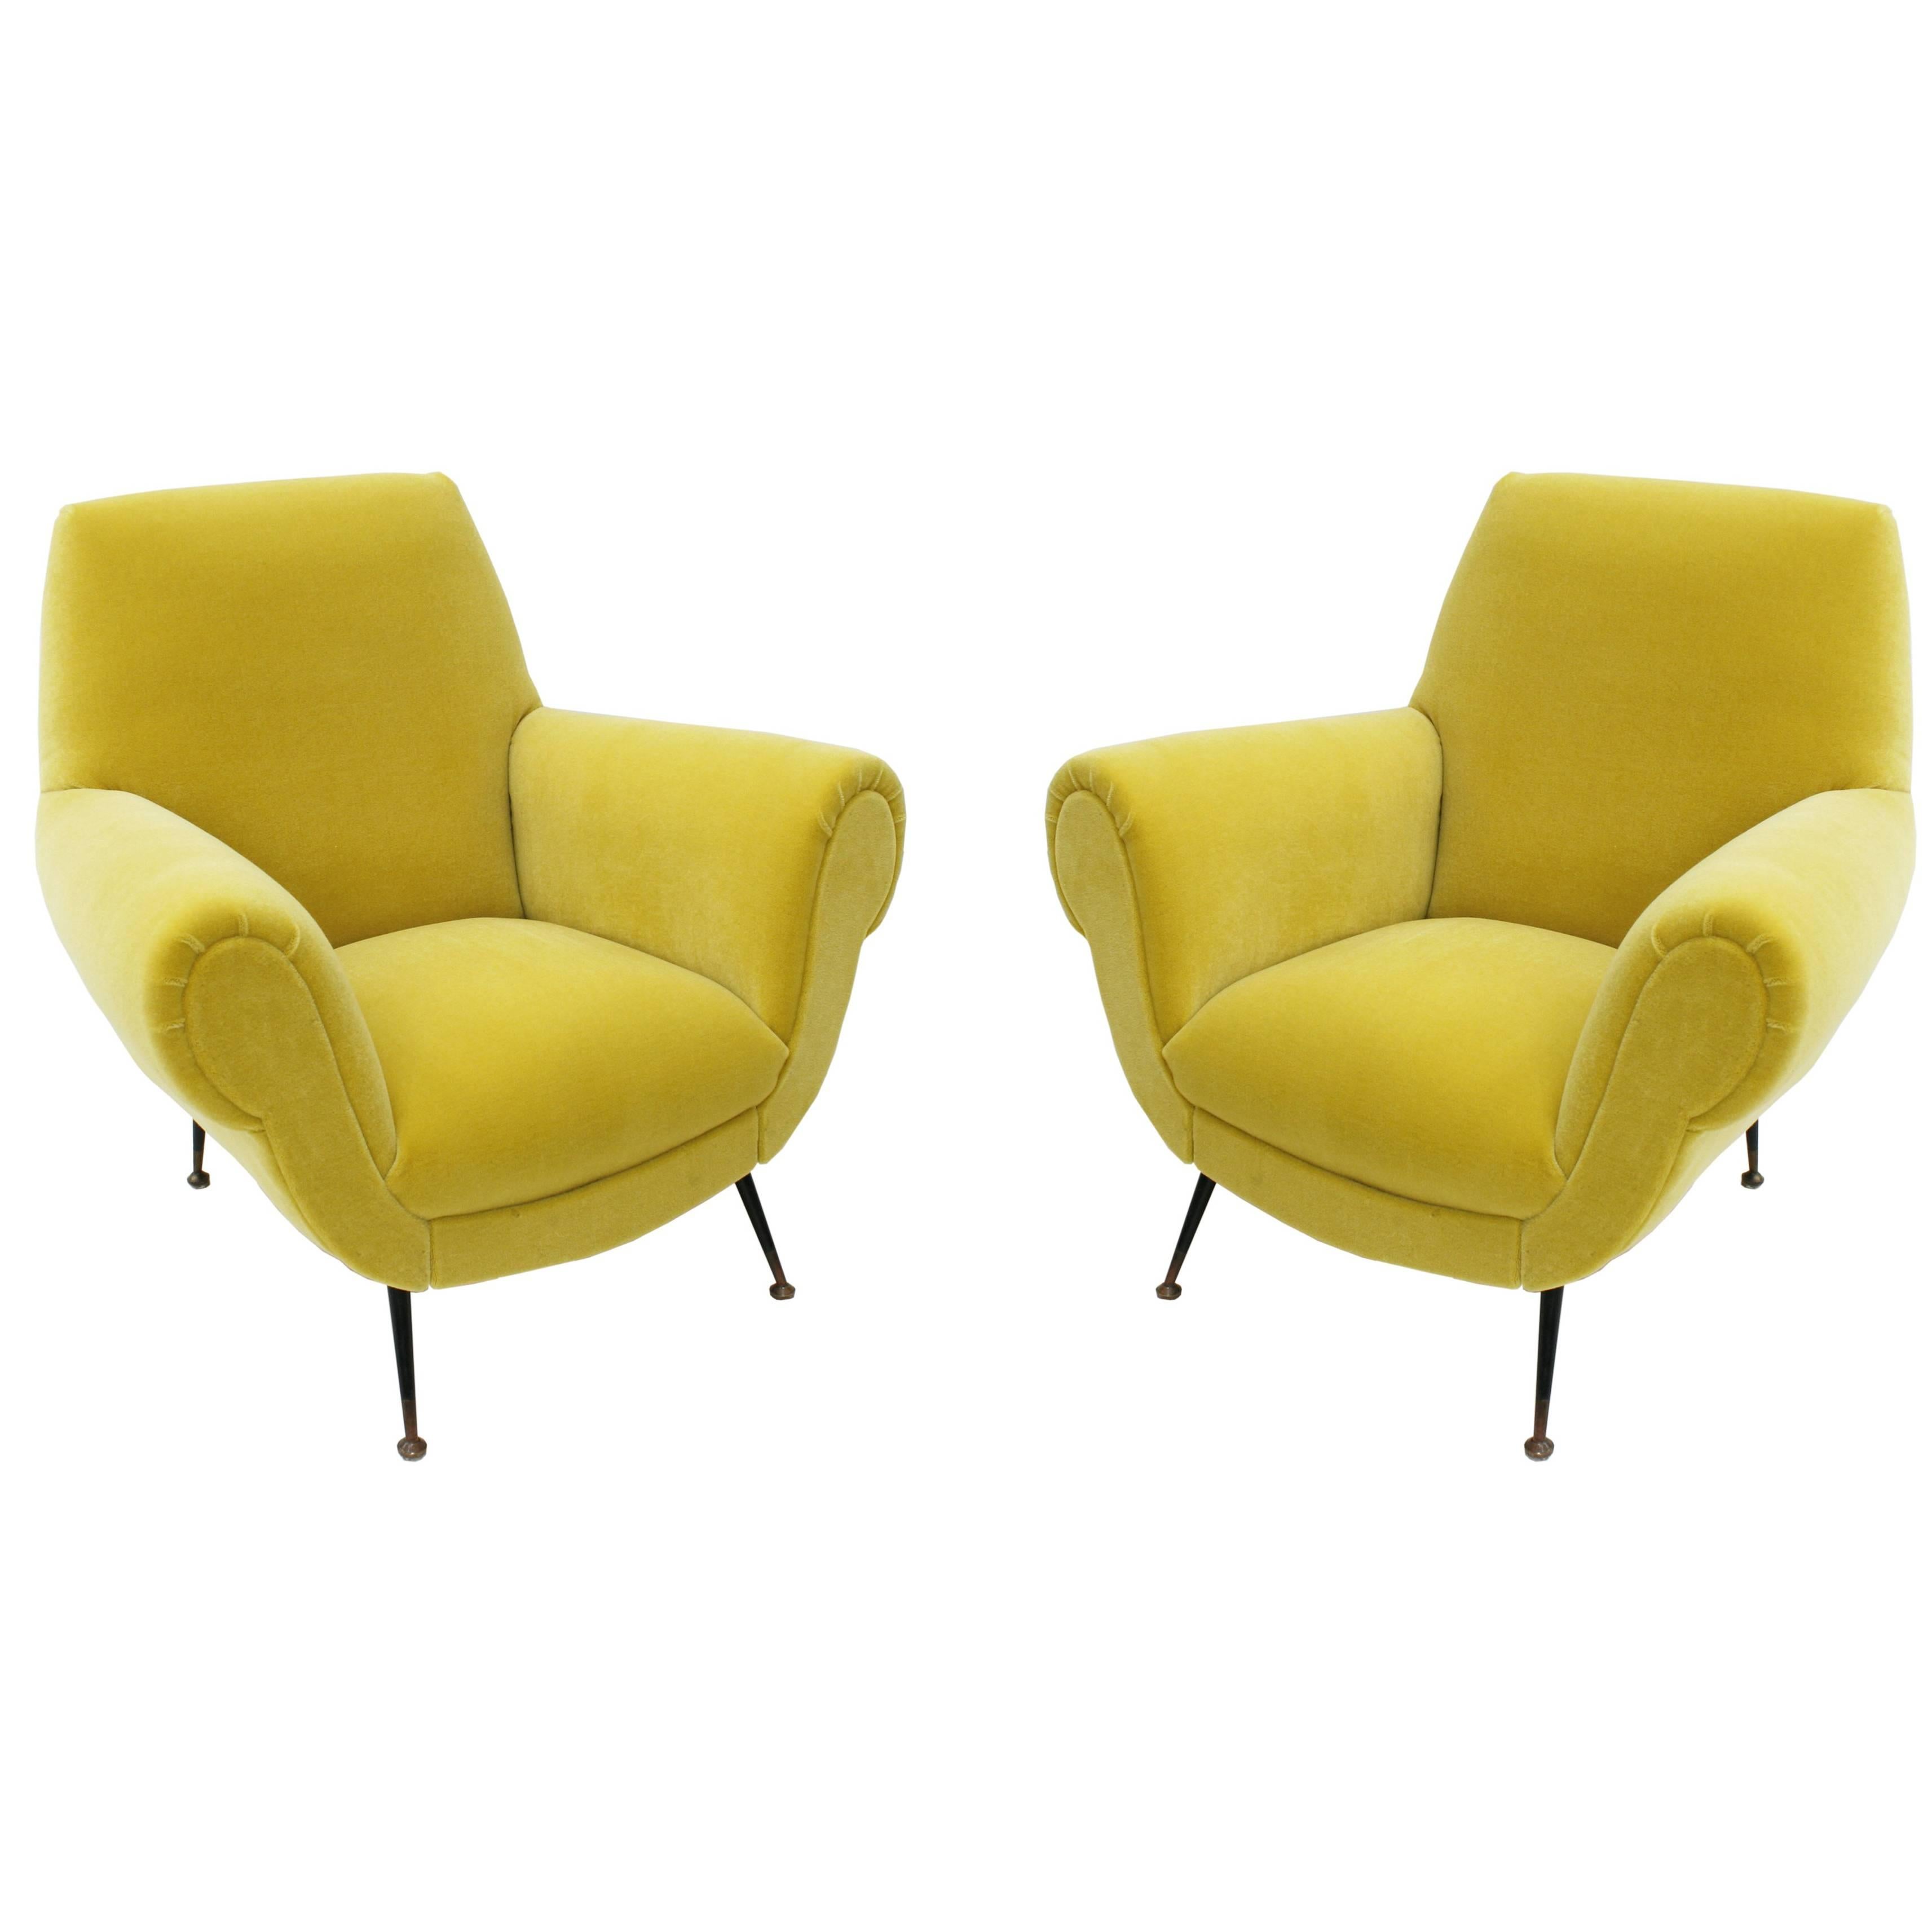 Pair of Chairs, Design of Gigi Radice for Minotti, Italy, 1950